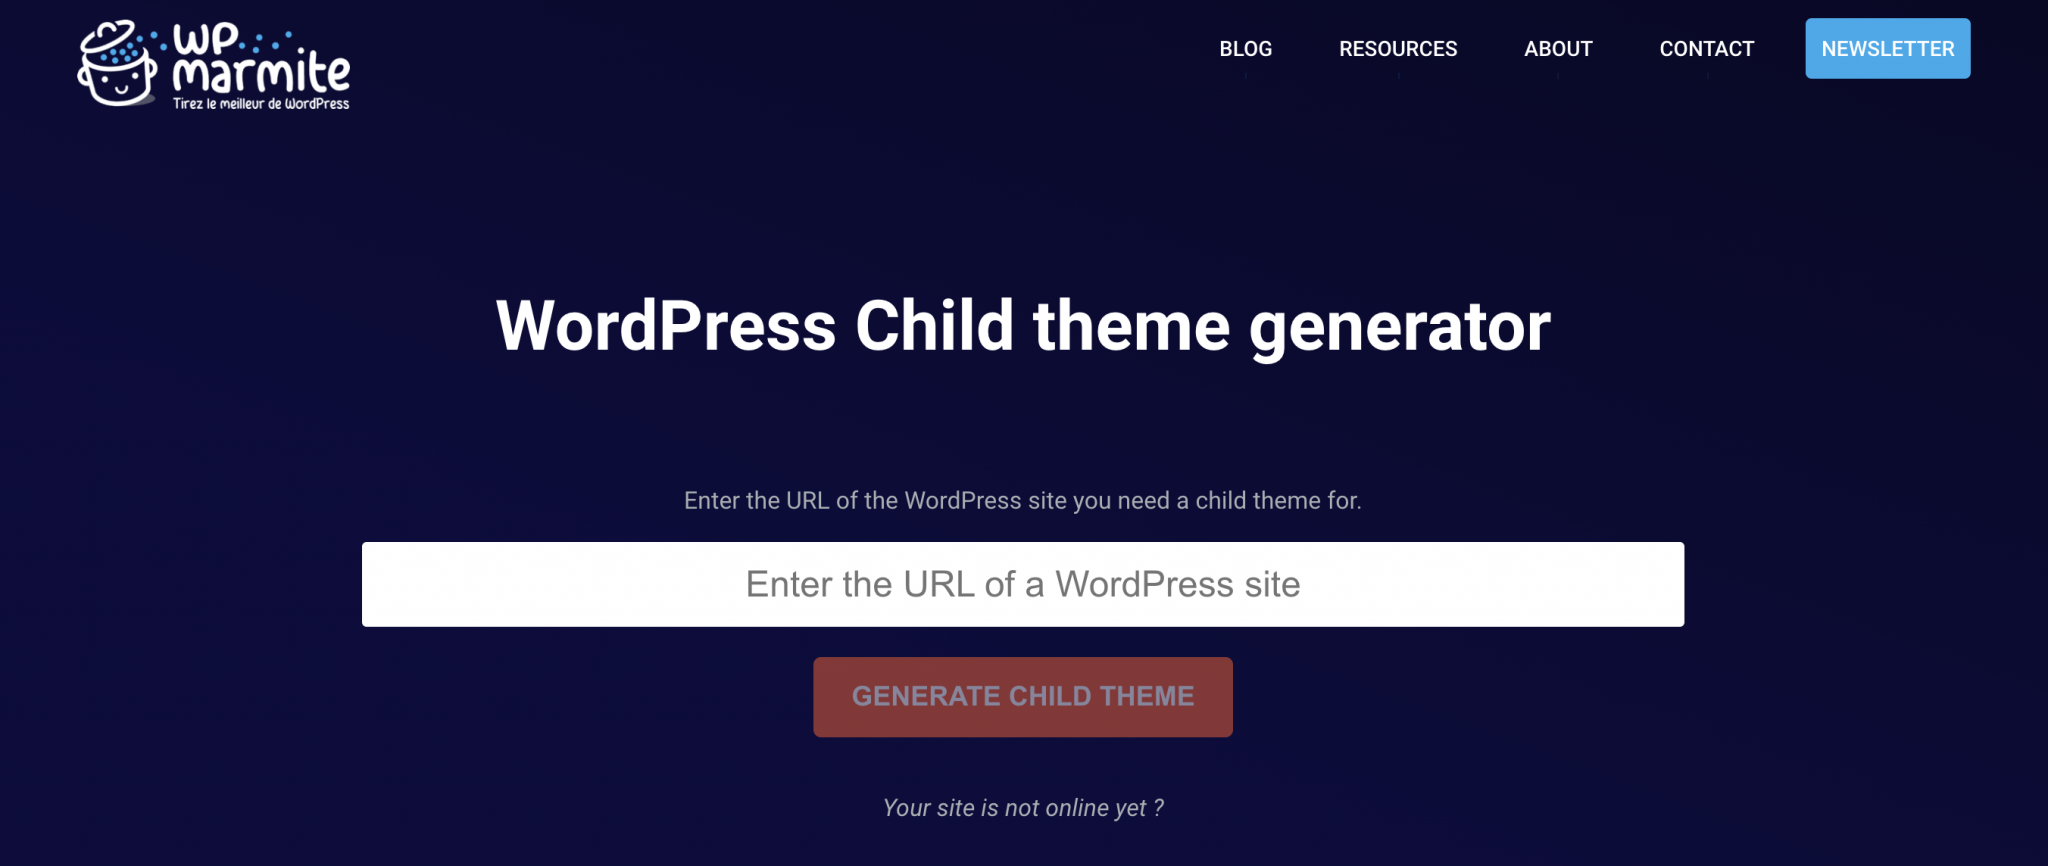 WPMarmite's wordpress child theme generator